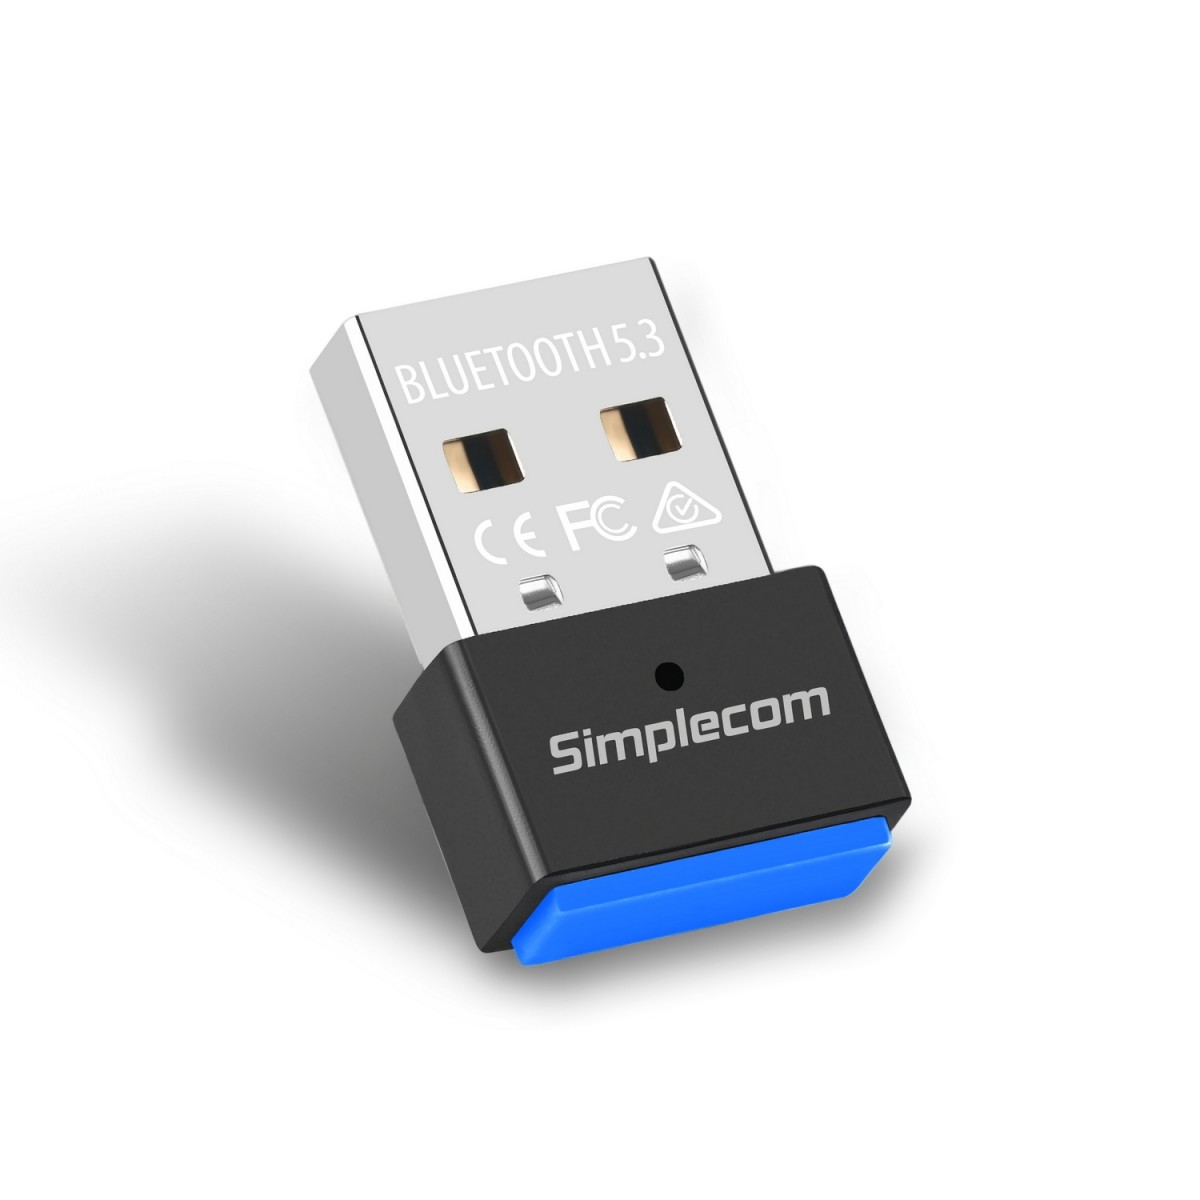  USB Bluetooth 5.3 Adapter Wireless Dongle  